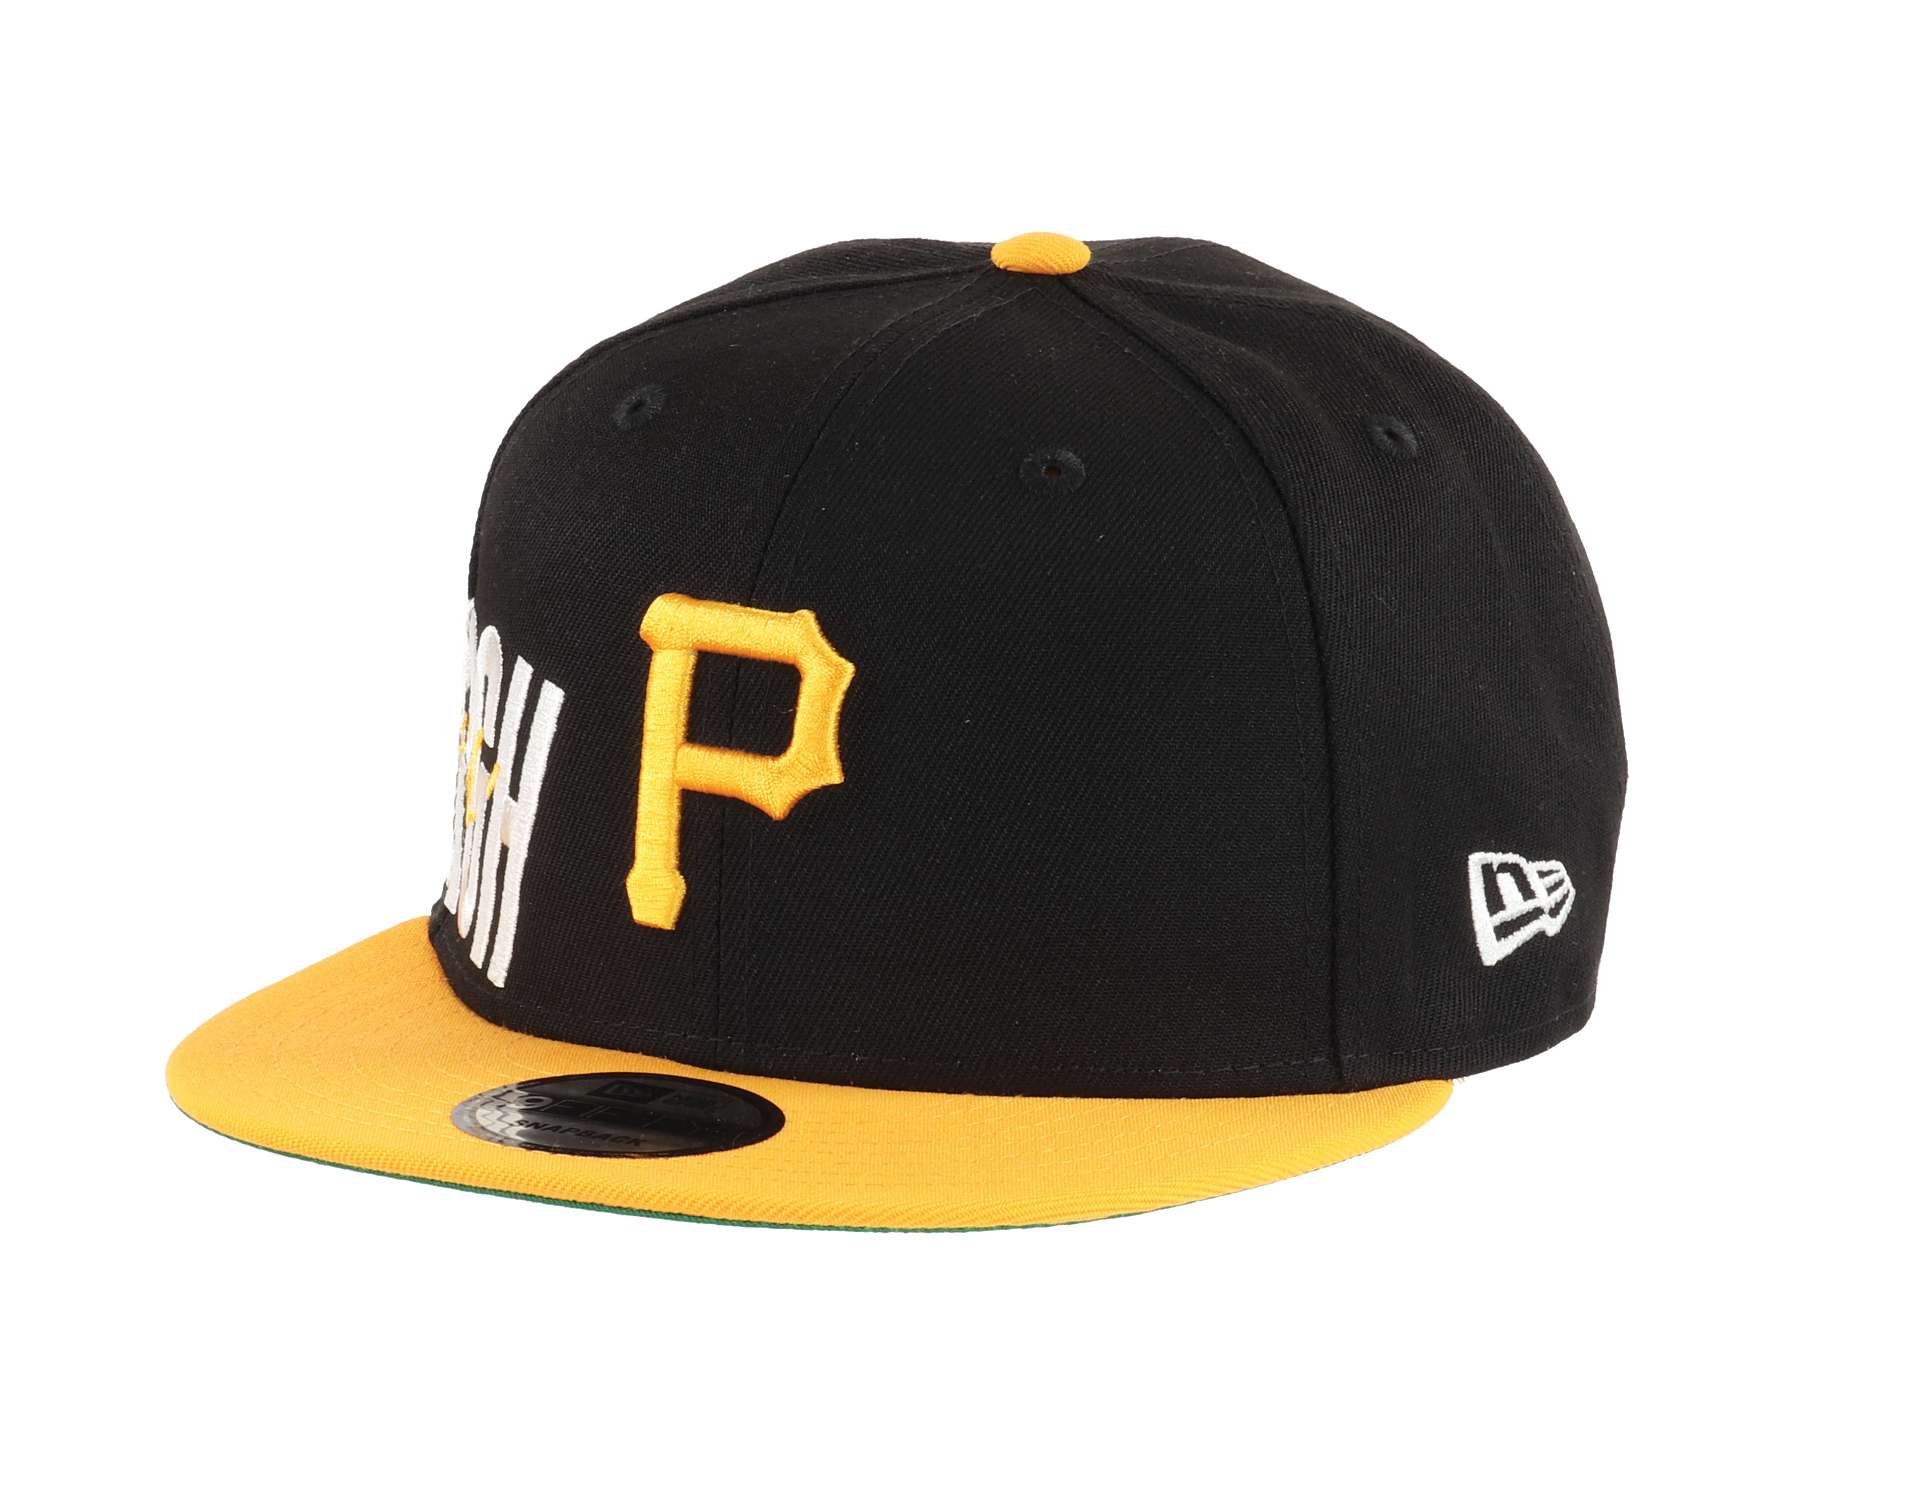 Pittsburgh Pirates Sidefont Black / Yellow 9Fifty Snapback Cap New Era